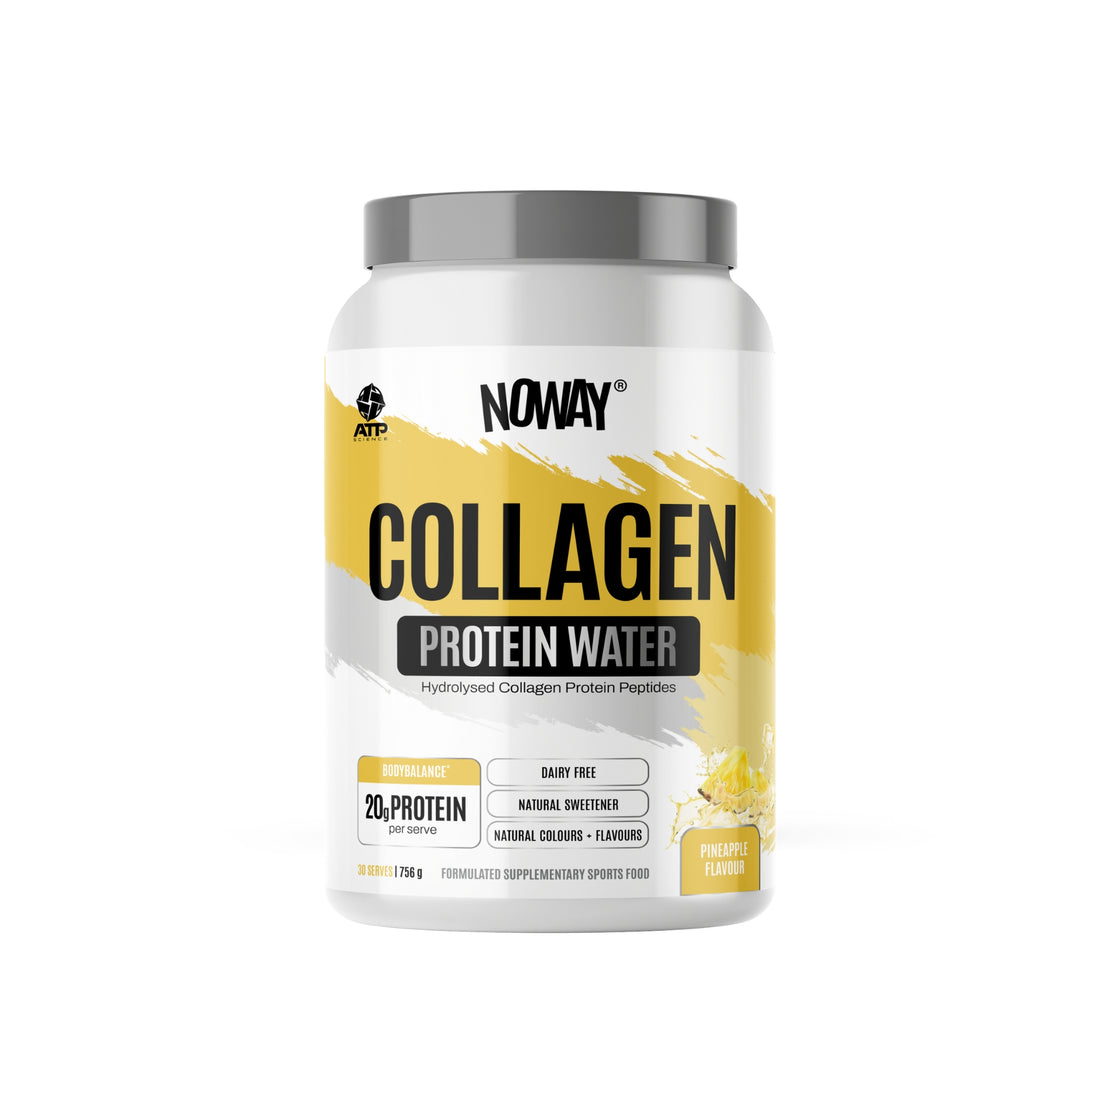 Noway Collagen Protein Water - Pineapple